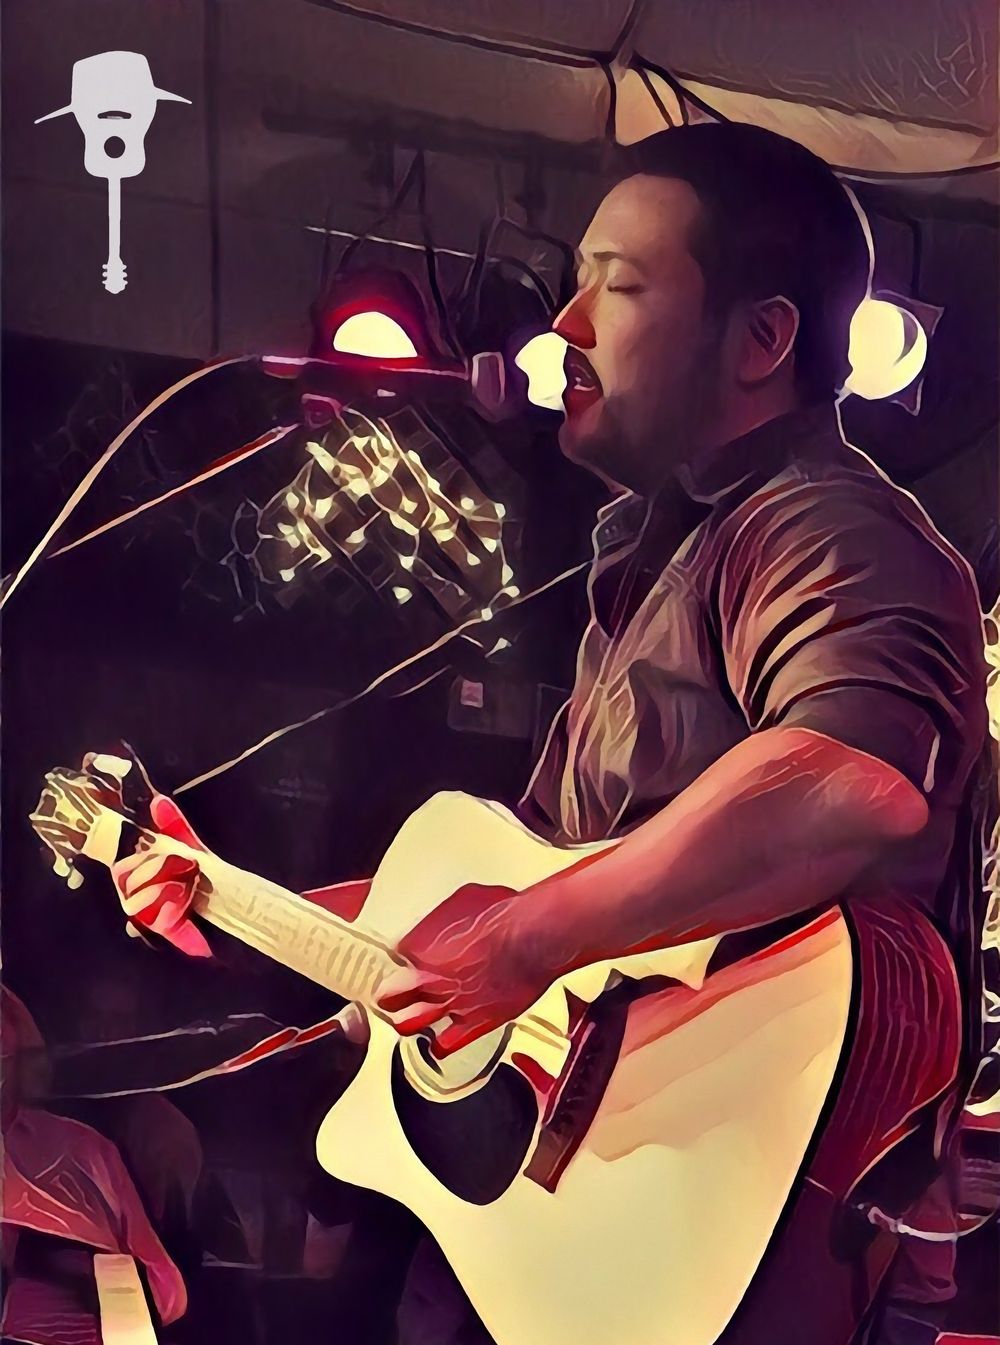 Michael Allen at Bluebird Cafe in 2017